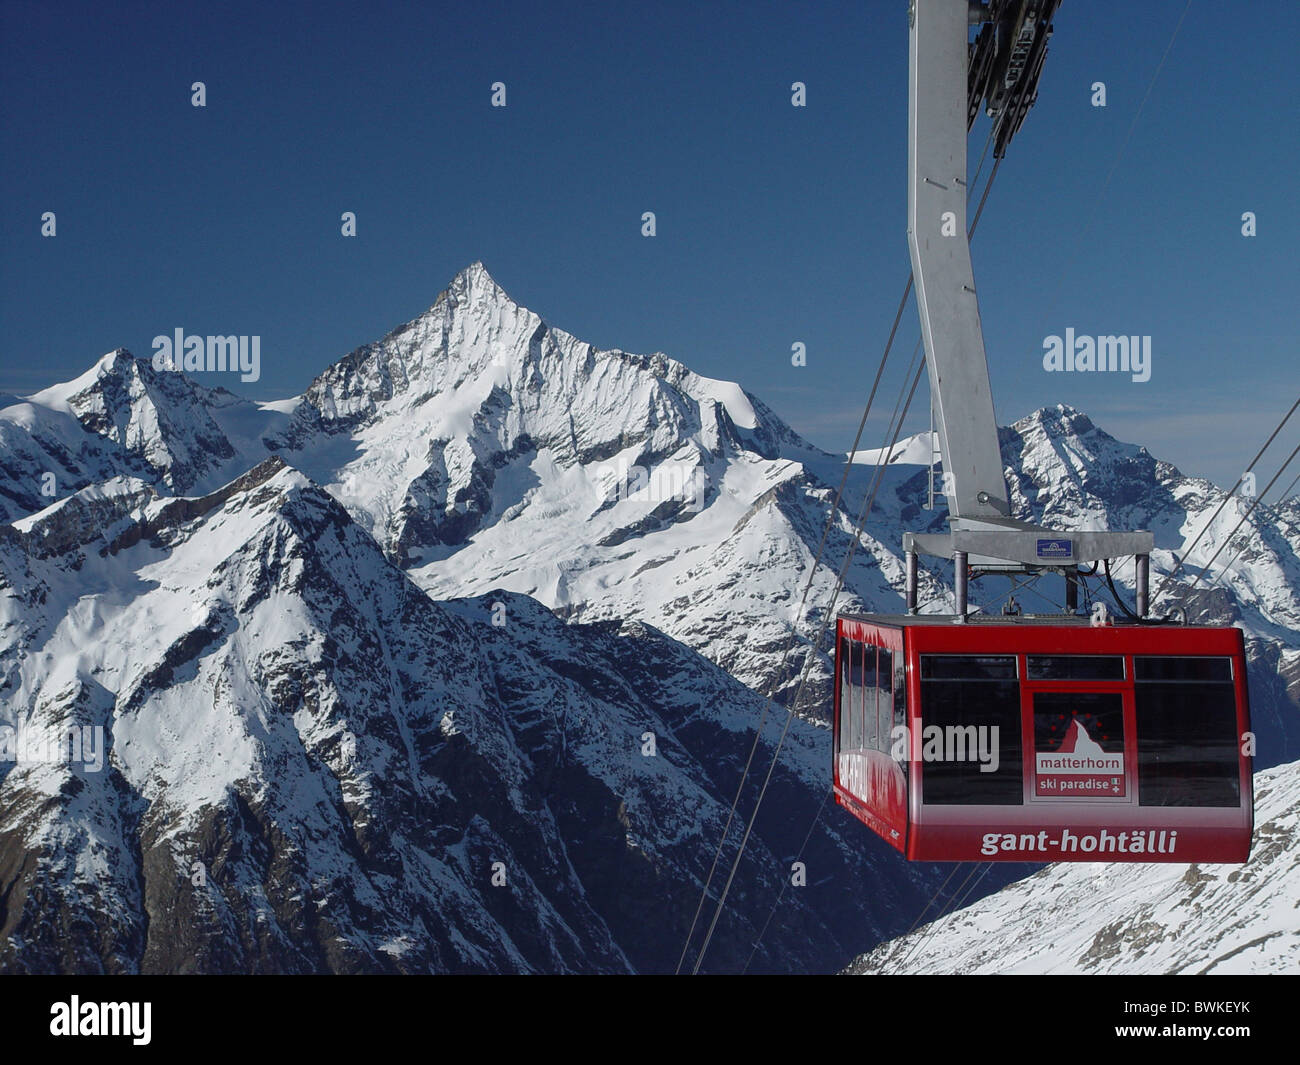 Weisshorn cable railway Gant-Hohtalli aerial cable railway railway Switzerland Europe canton Valais mountains Stock Photo